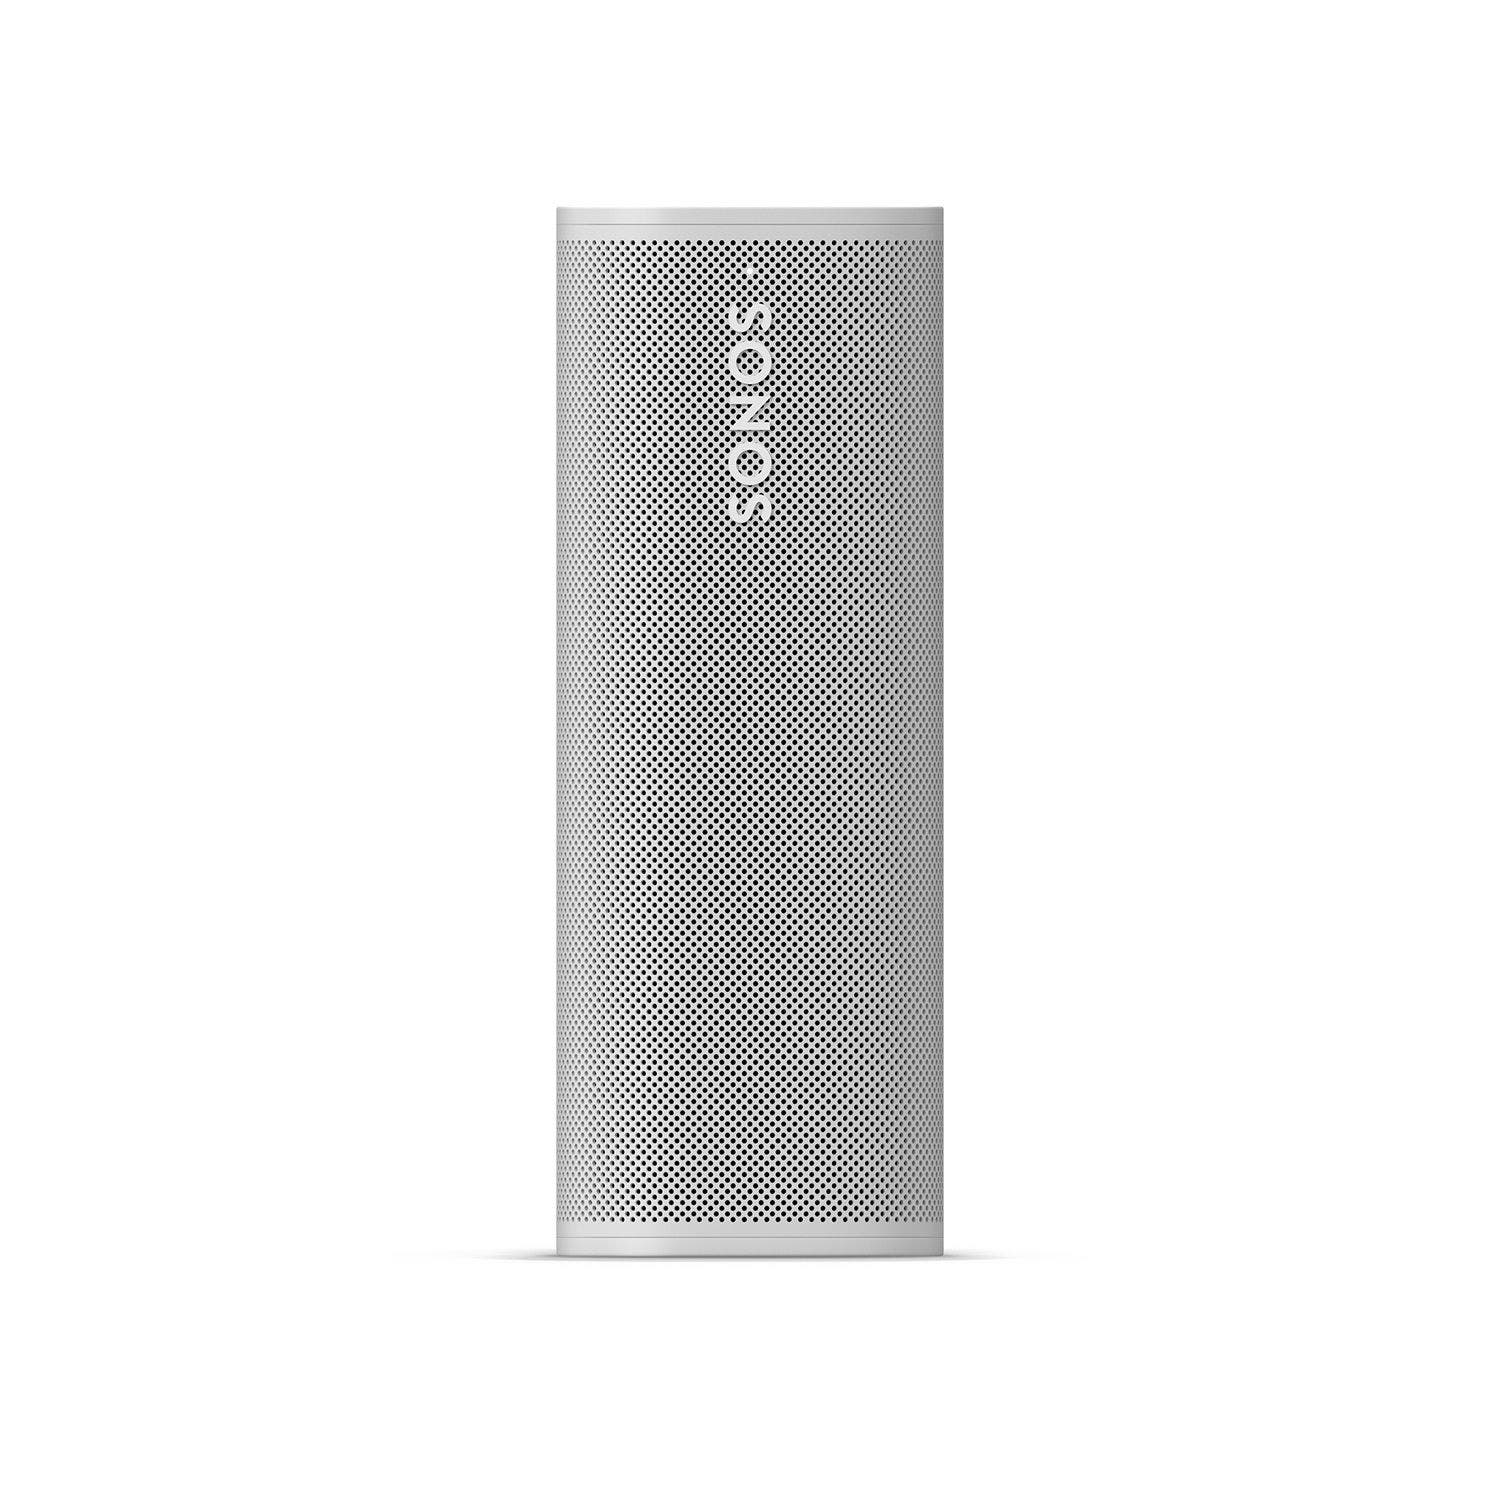 Sonos Roam Portable Bluetooth and WiFi Speaker